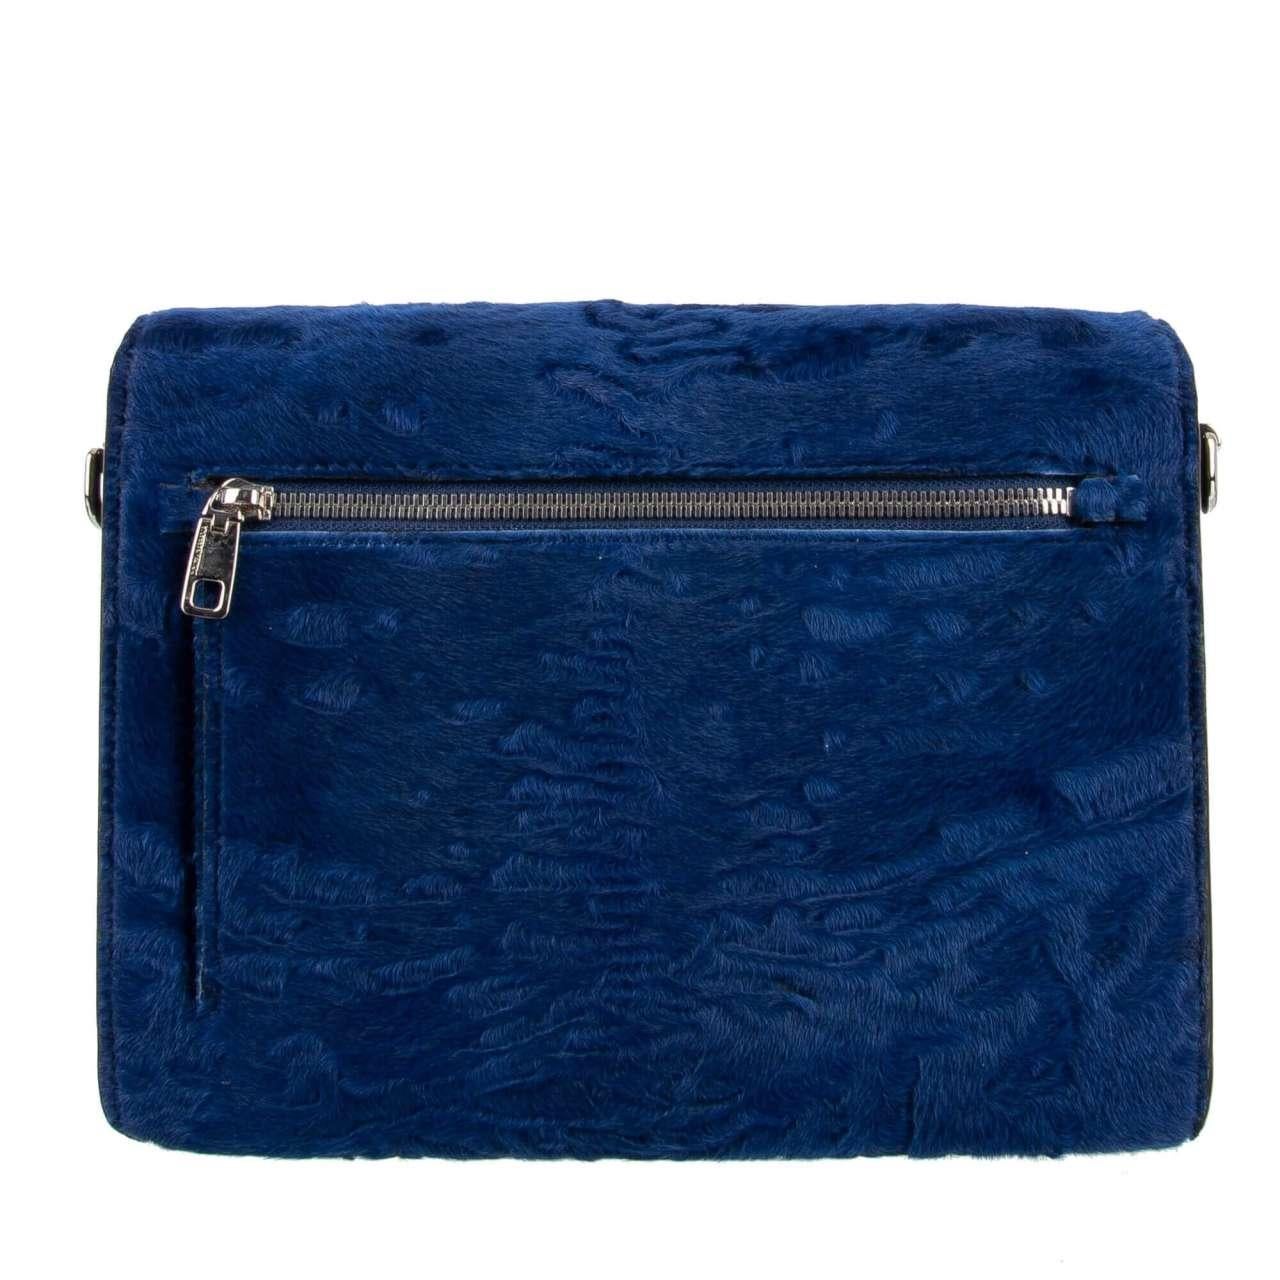 Dolce & Gabbana - Astrakan Fur LUCIA Bag Blue Black For Sale 1